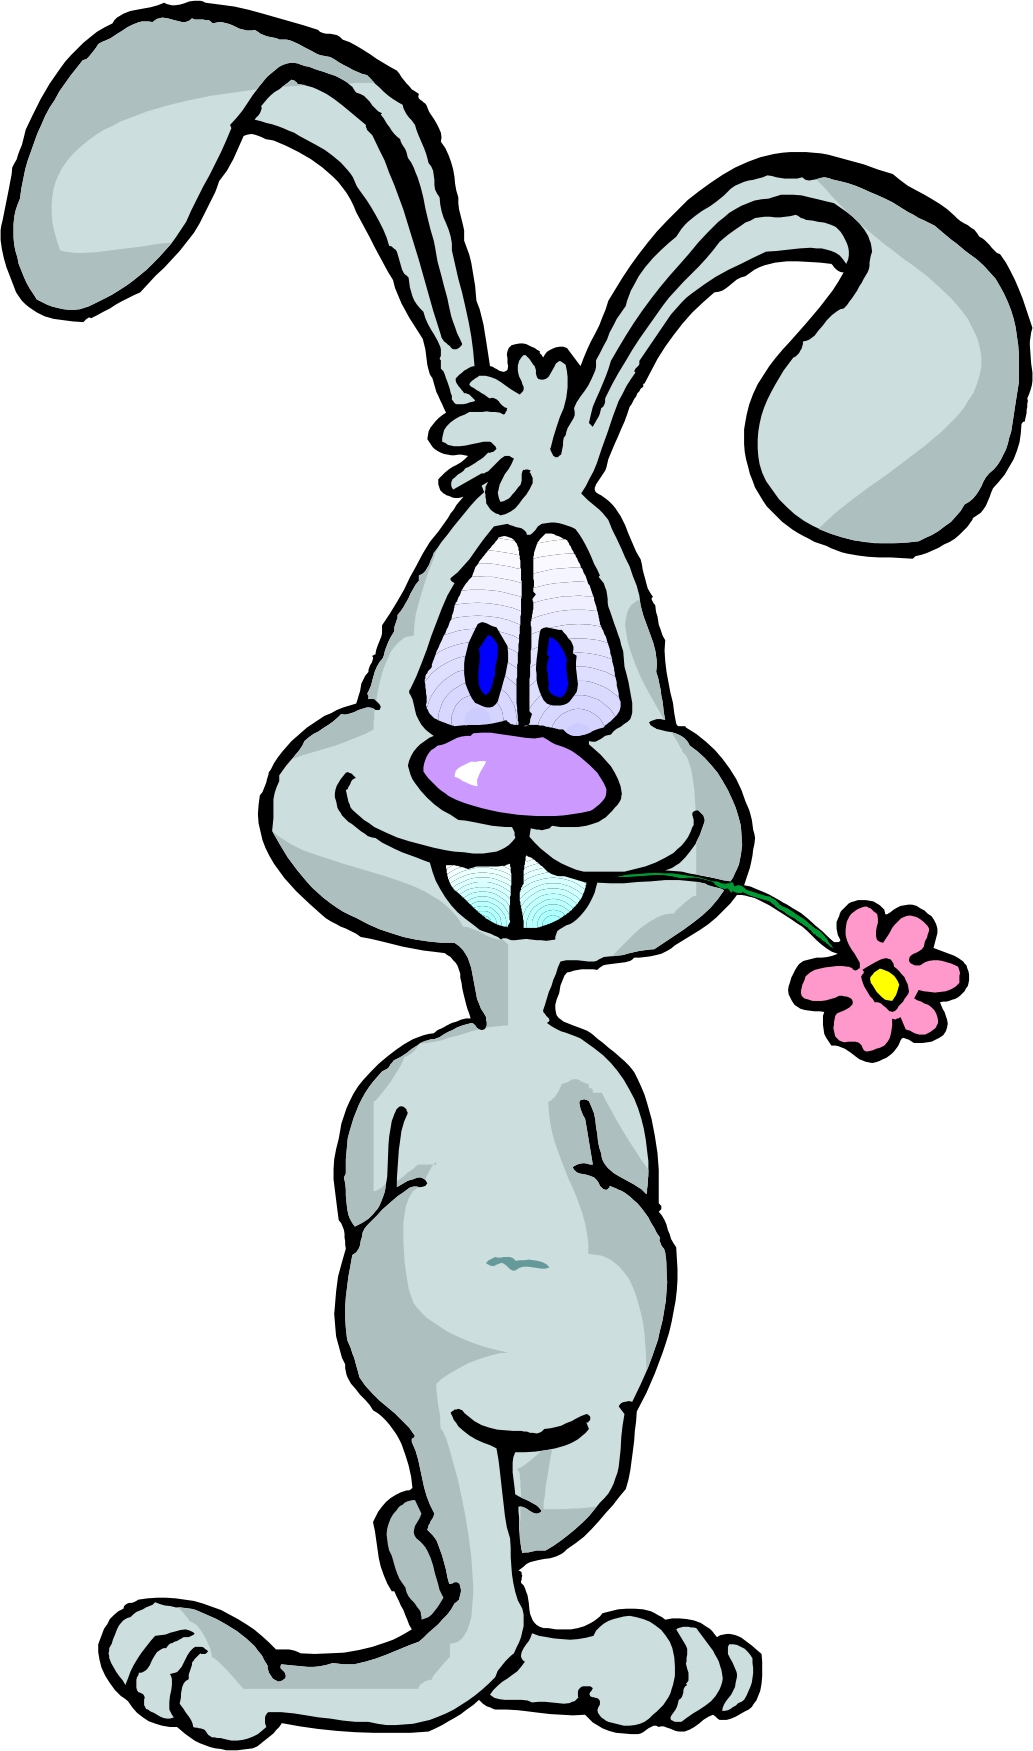 Free Rabbit Cartoon Images, Download Free Clip Art, Free